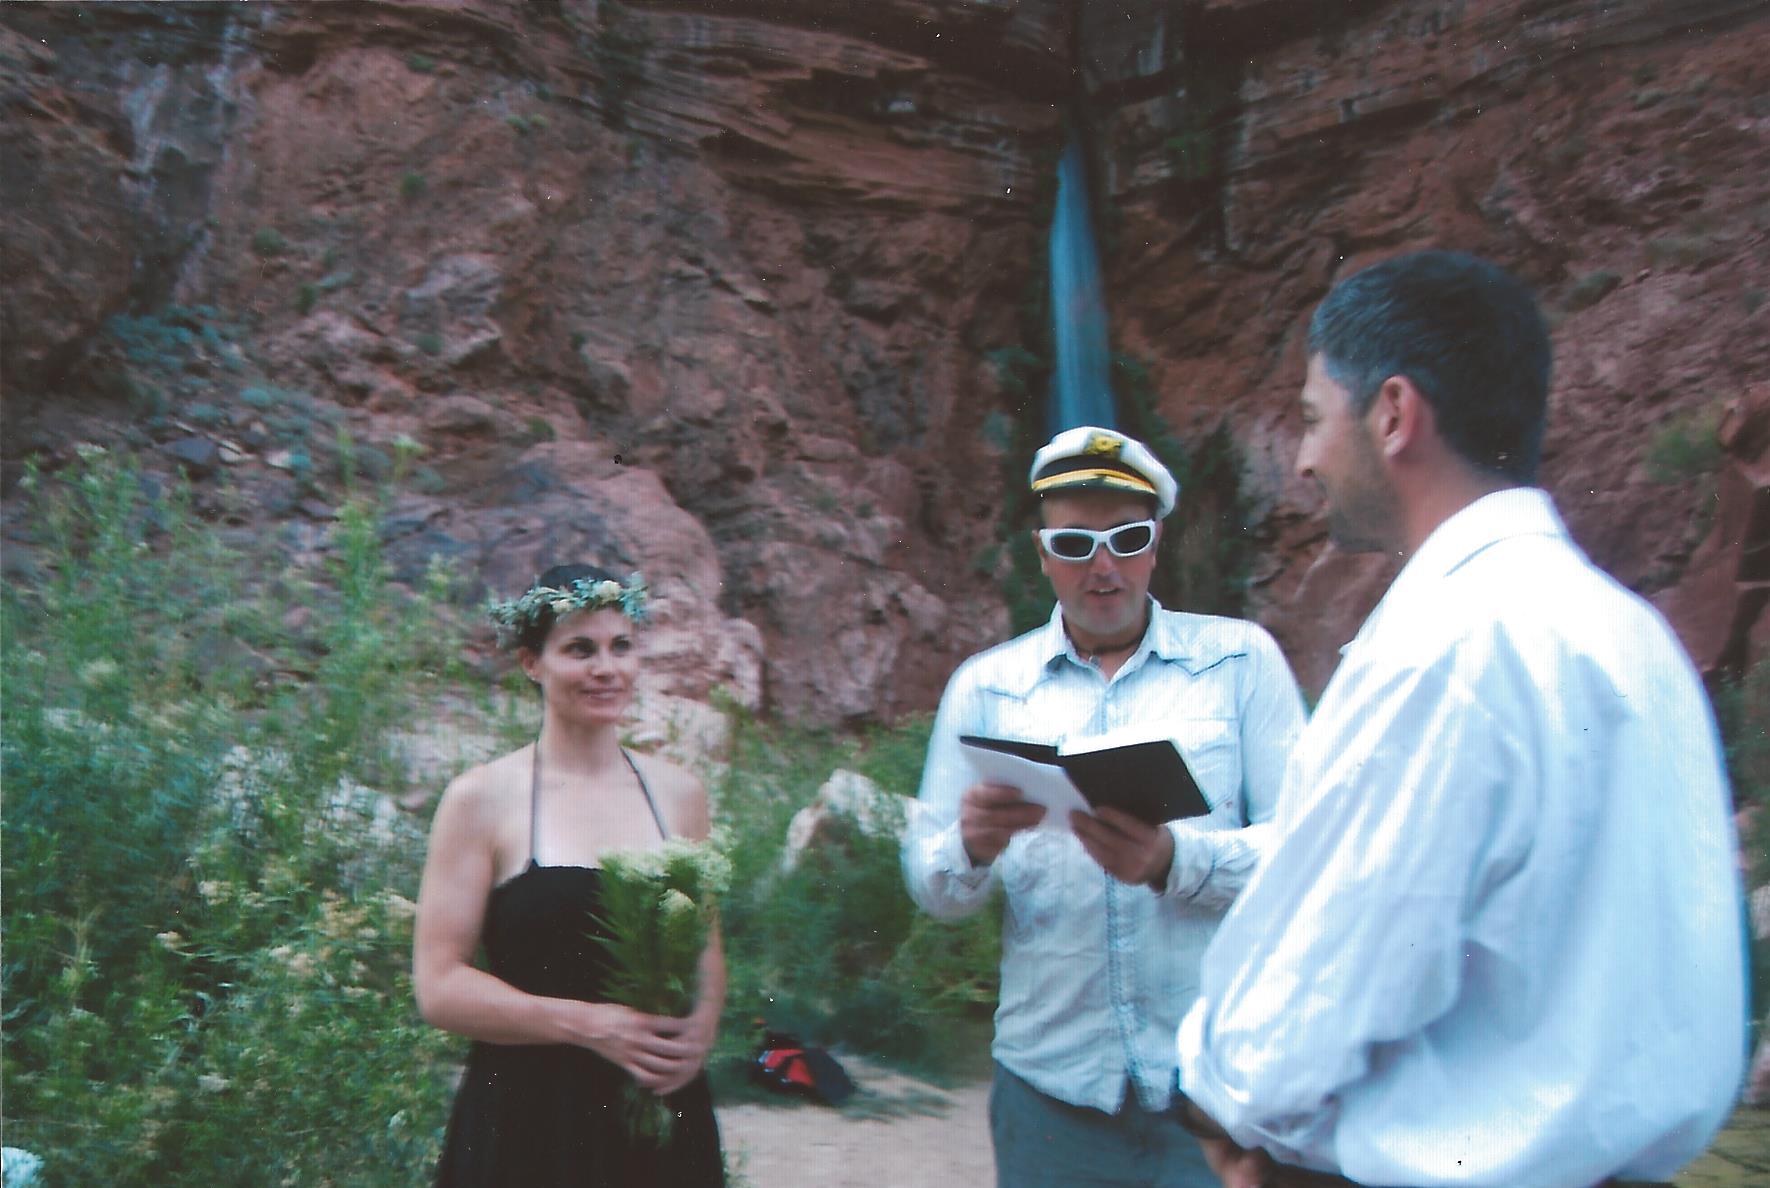 The Deer Creek Falls ceremony in Aug. 2013